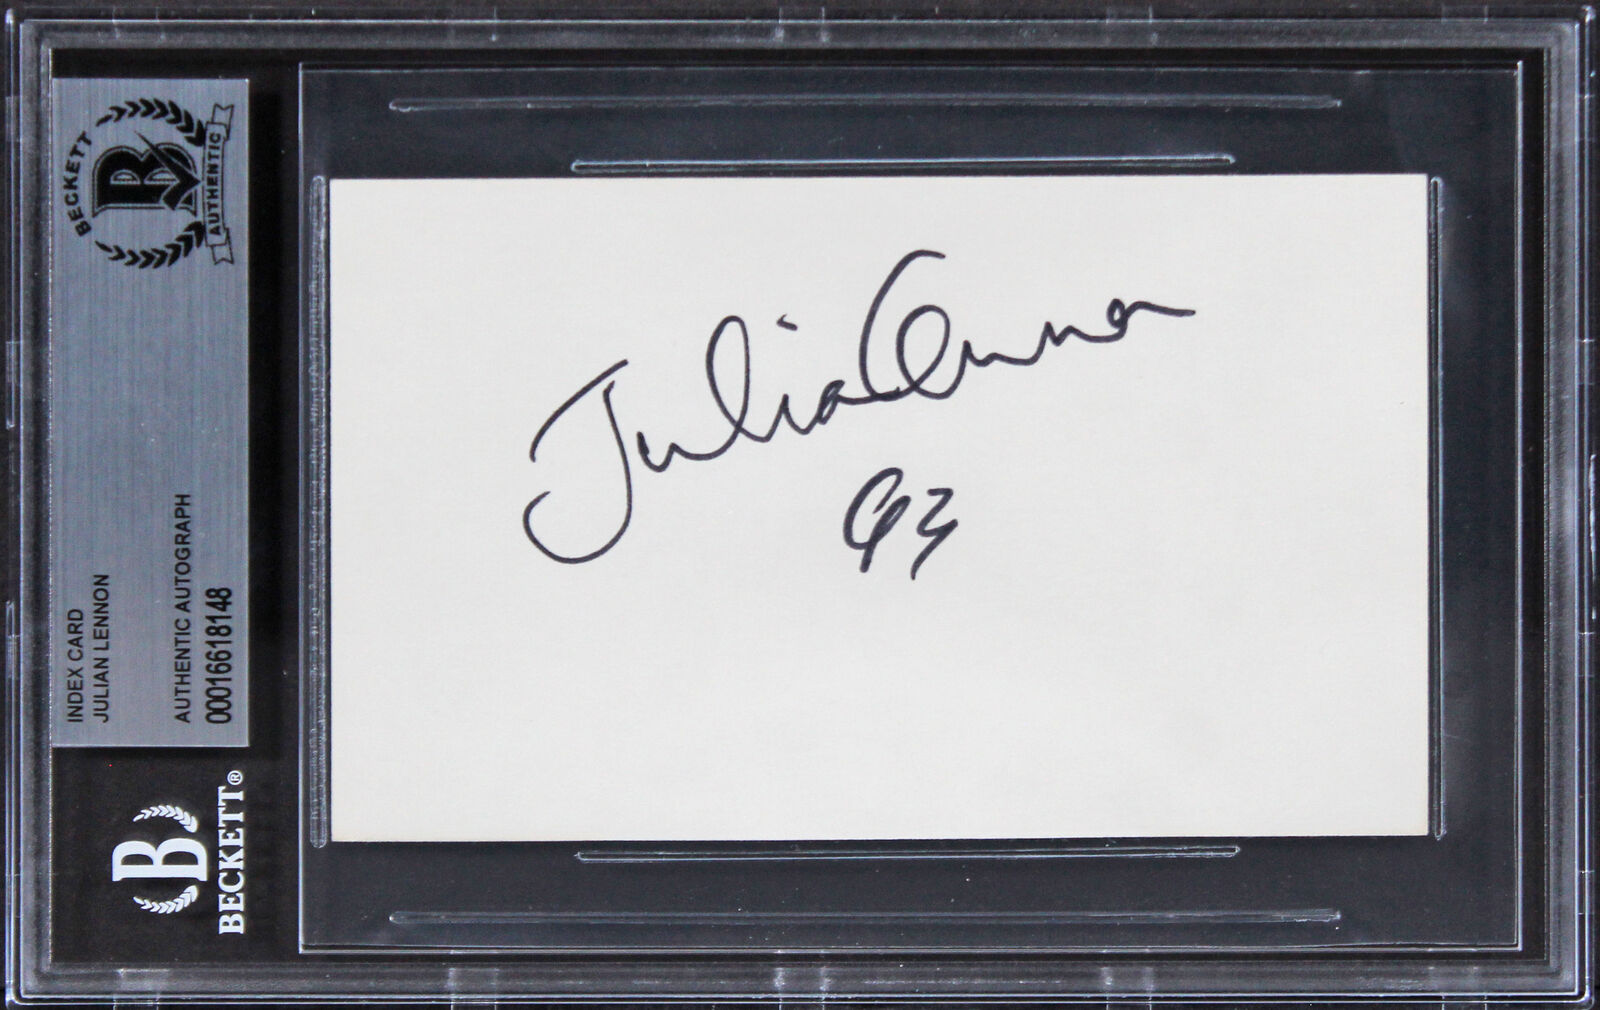 Julian Lennon Singer 93 Authentic Signed 3x5 Index Card Autographed BAS Slabbed